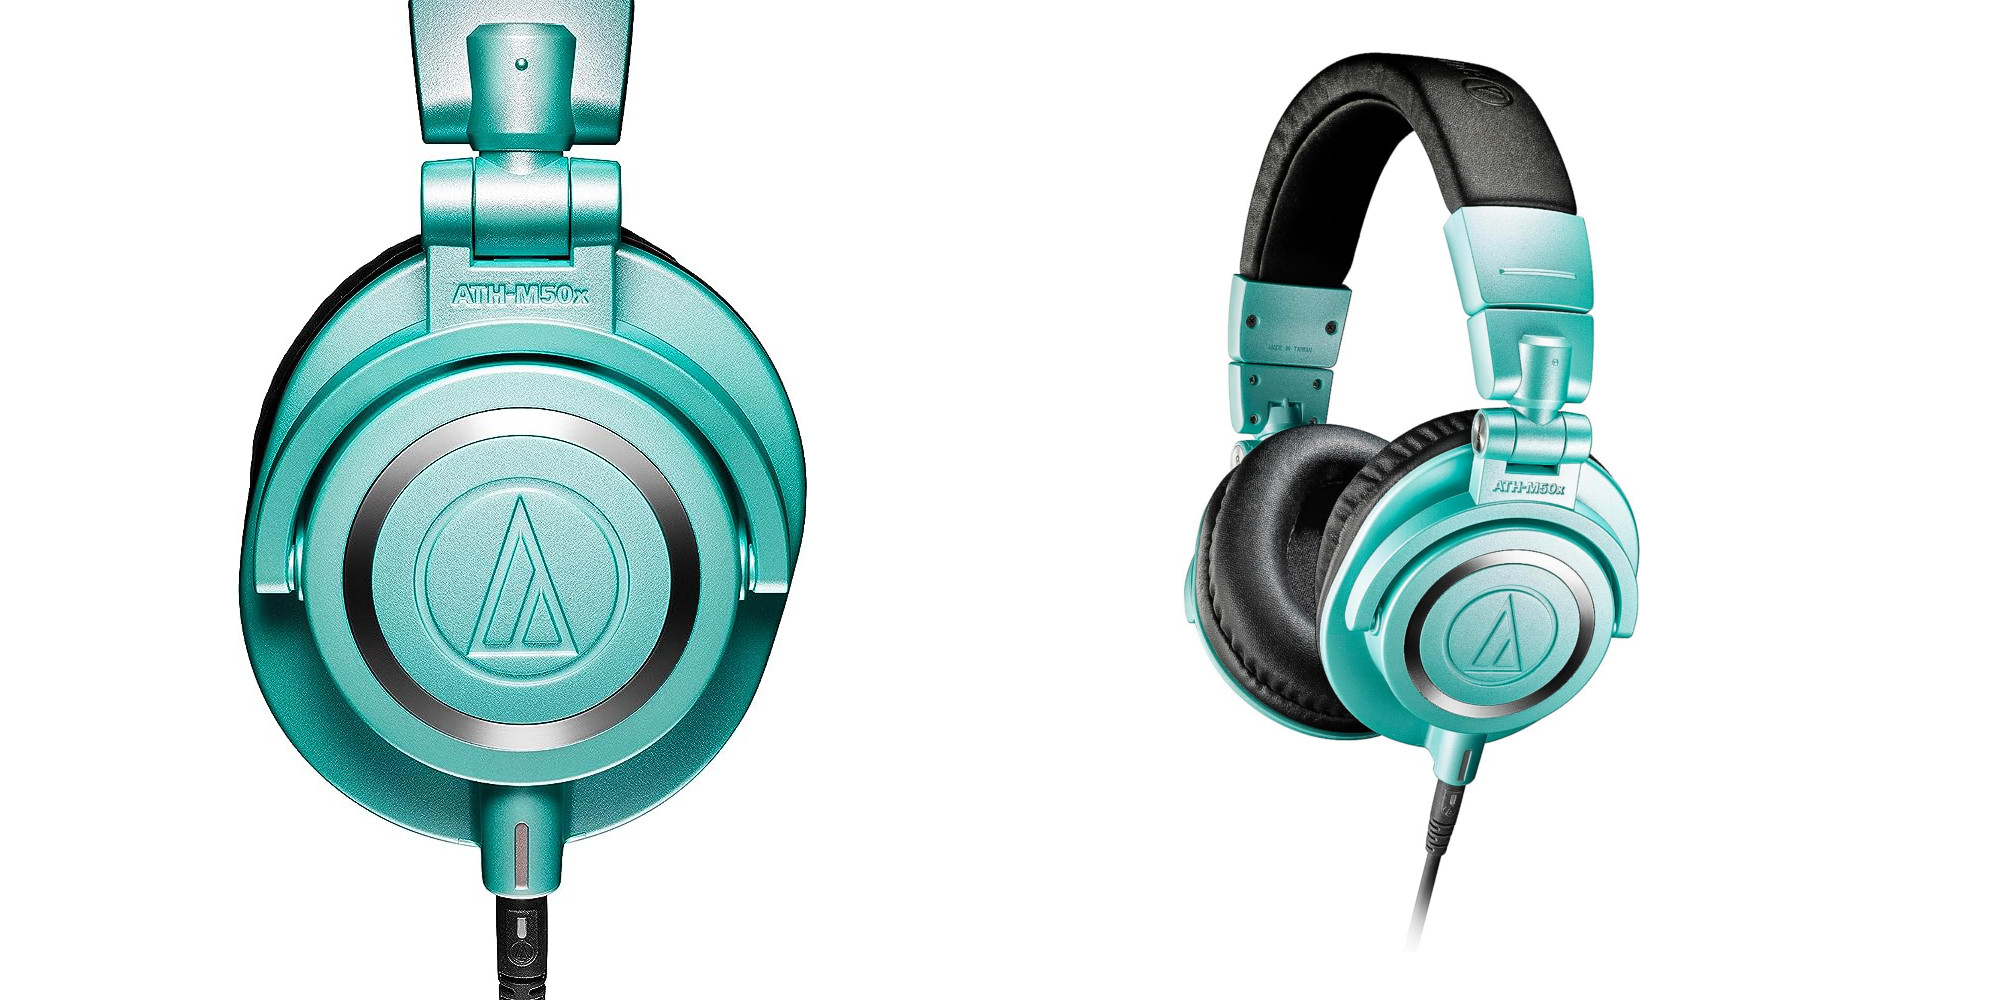 New Ice Blue Audio-Technica ATH-M50x headphones